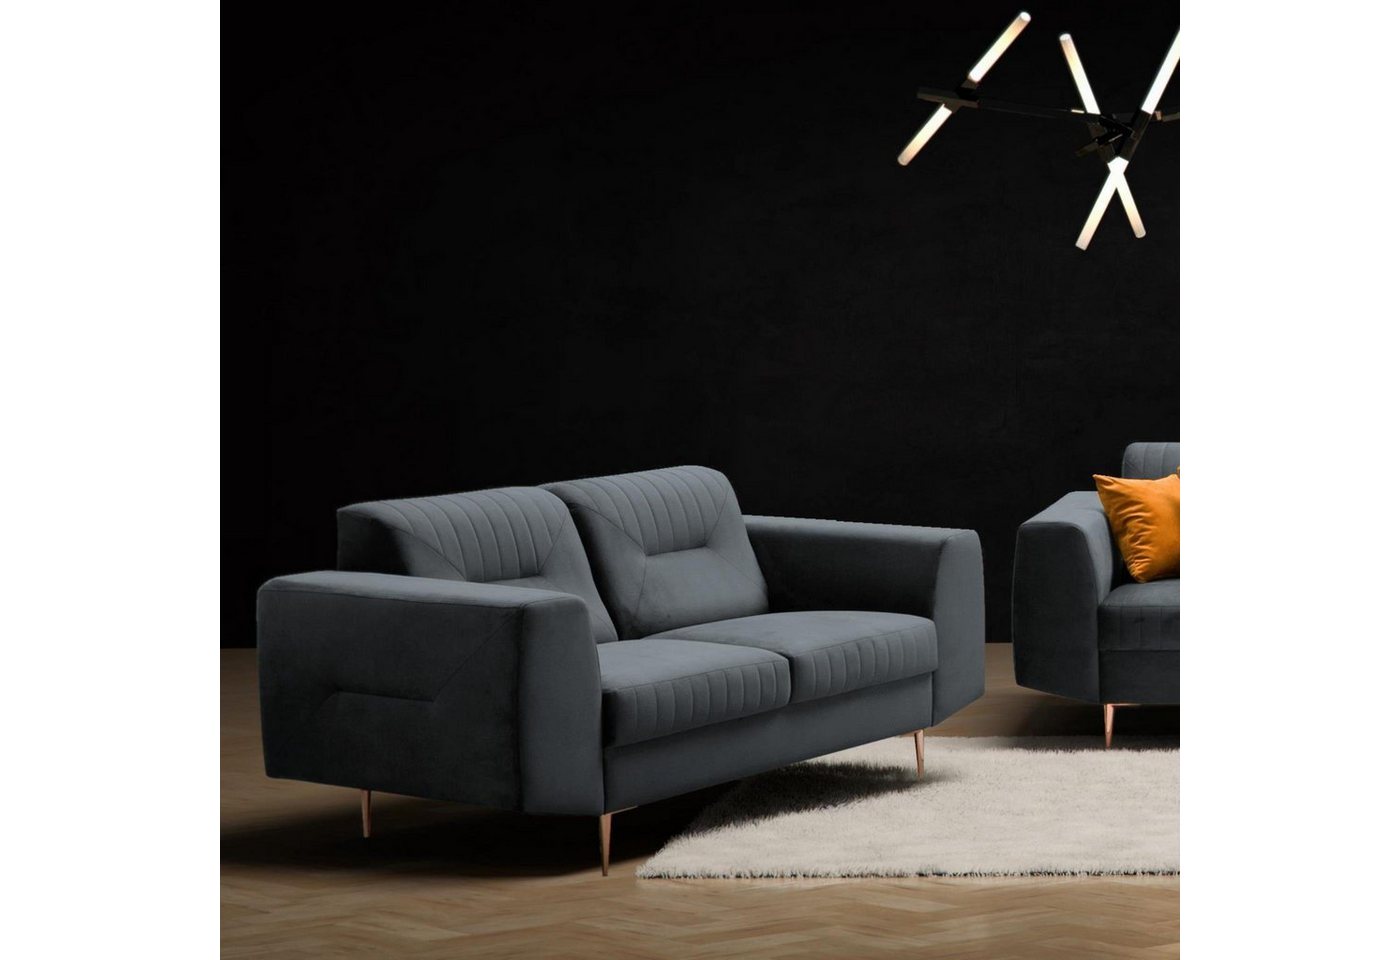 Beautysofa 2-Sitzer VENEZIA, Relaxsofa im modernes Design, mit Metallbeine, Zweisitzer Sofa aus Velours von Beautysofa